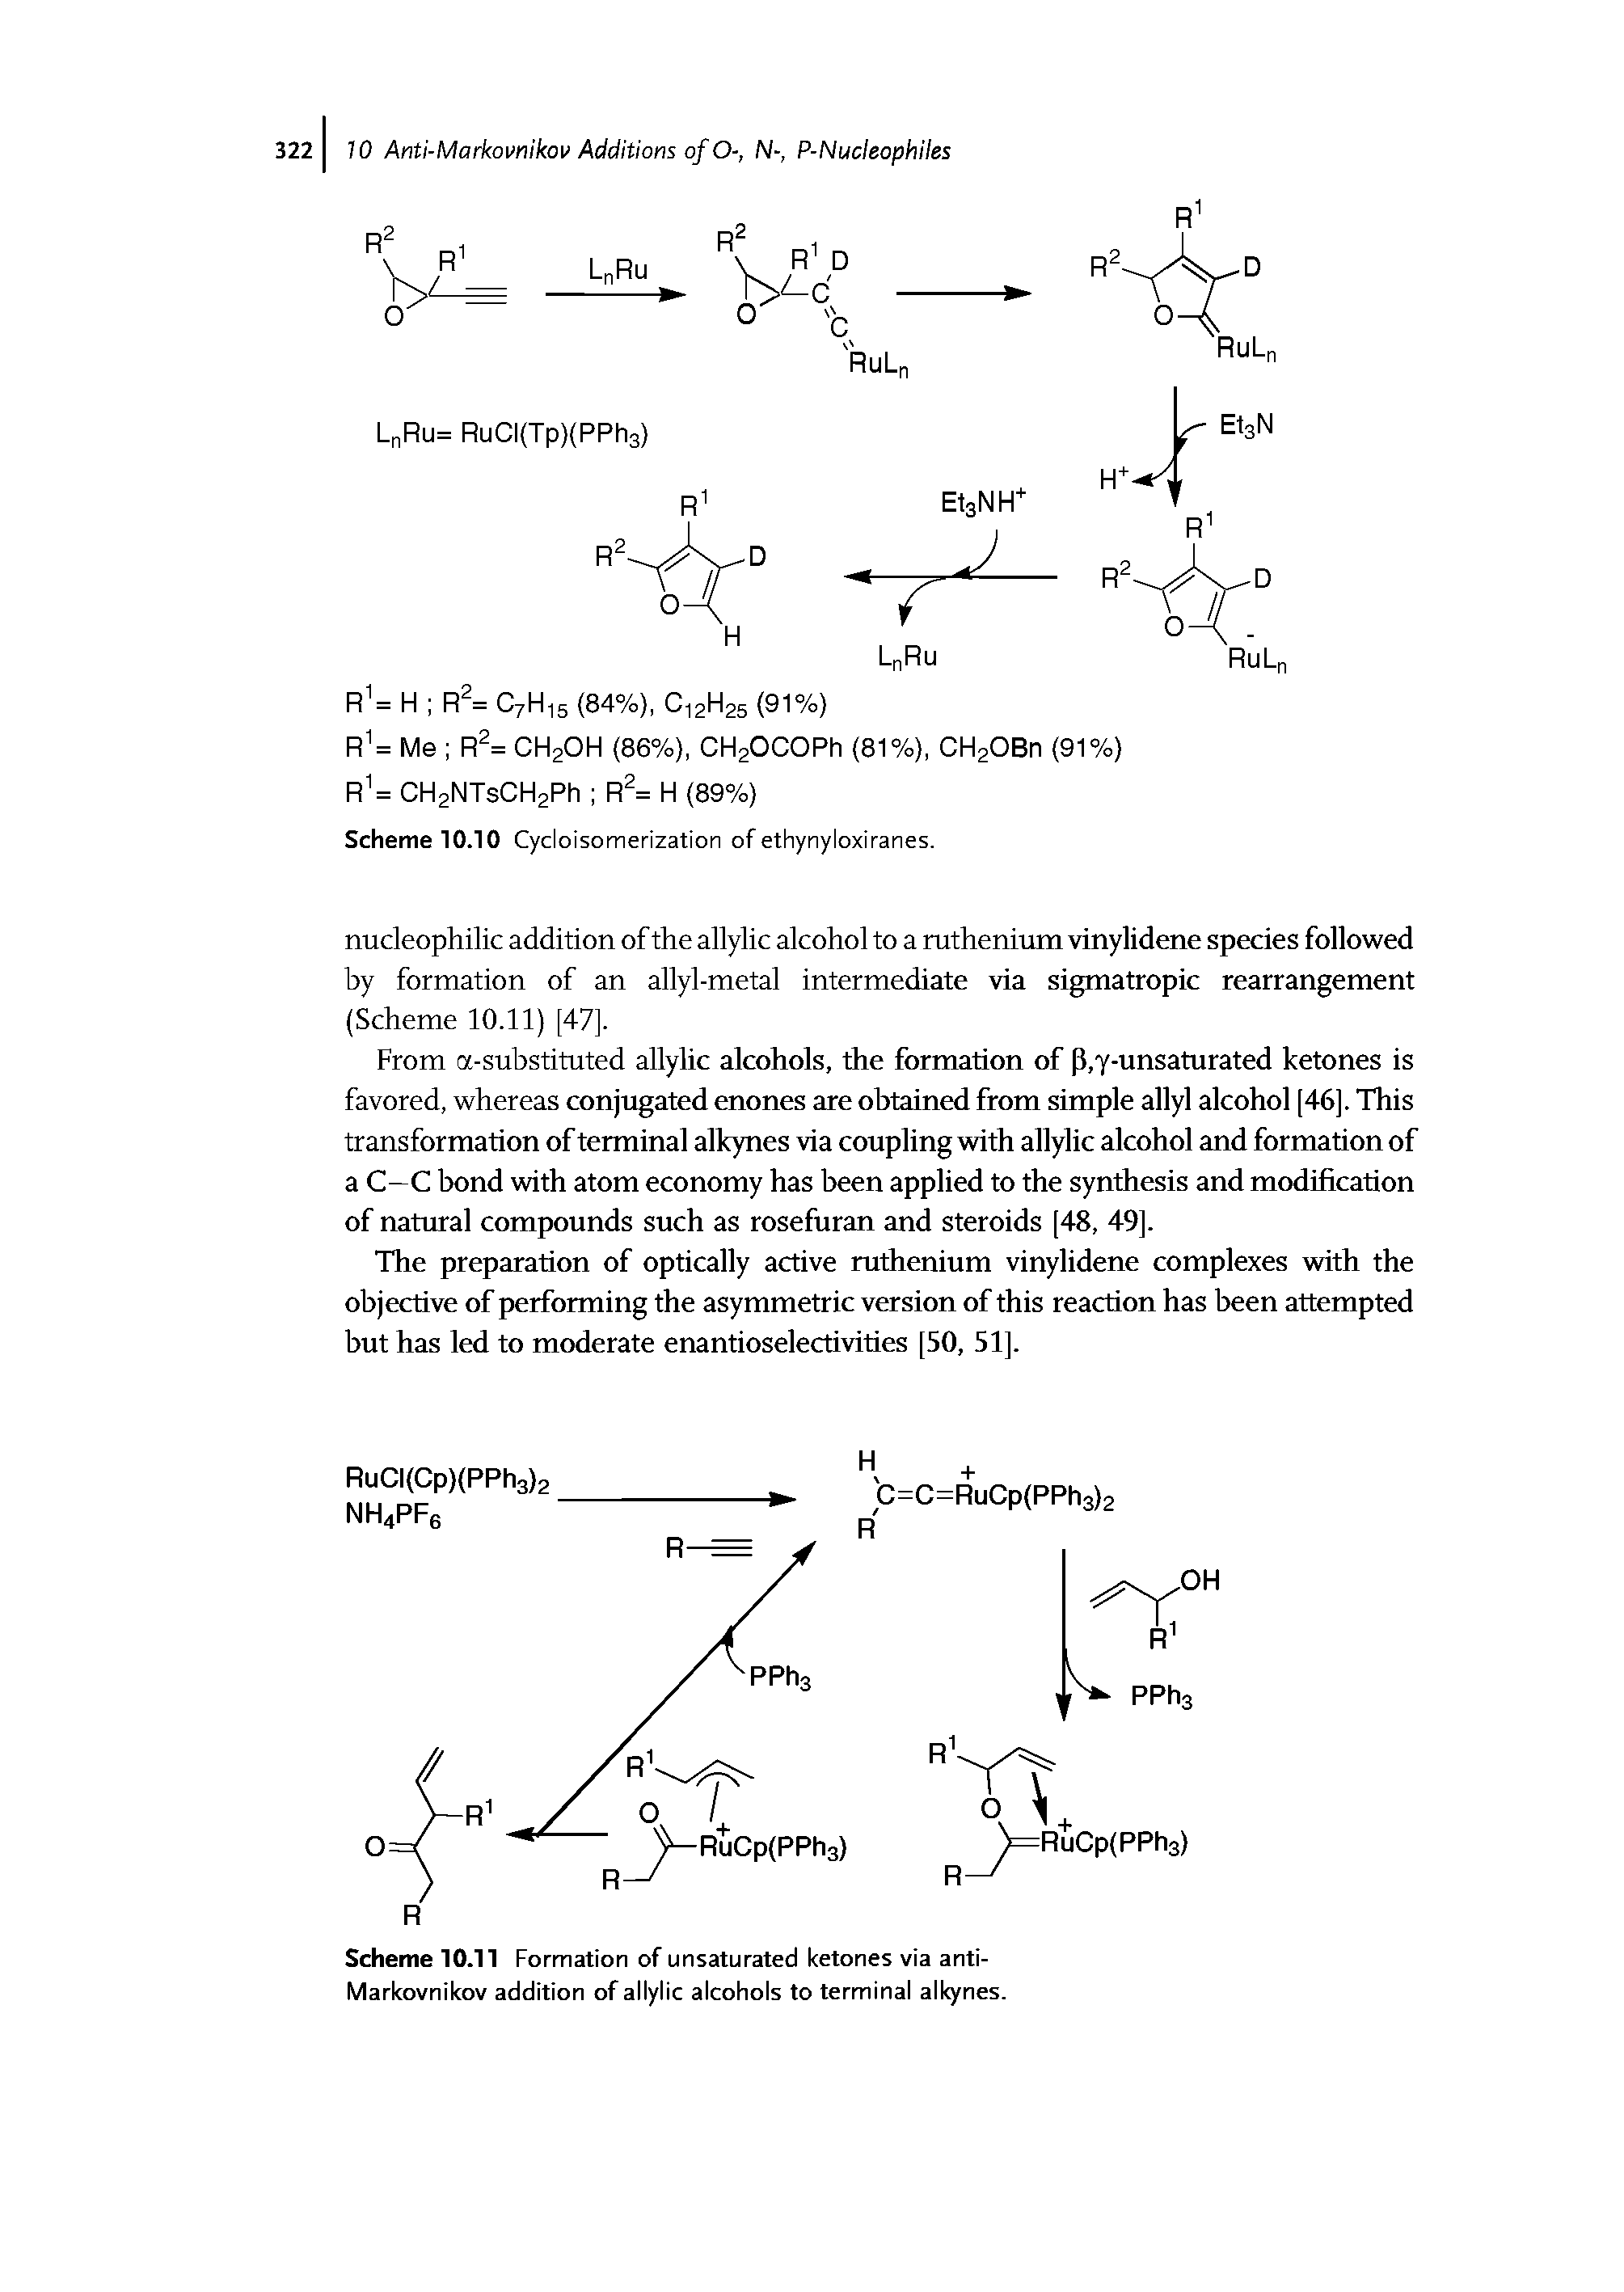 Scheme 10.11 Formation of unsaturated ketones via anti-Markovnikov addition of allylic alcohols to terminal alkynes.